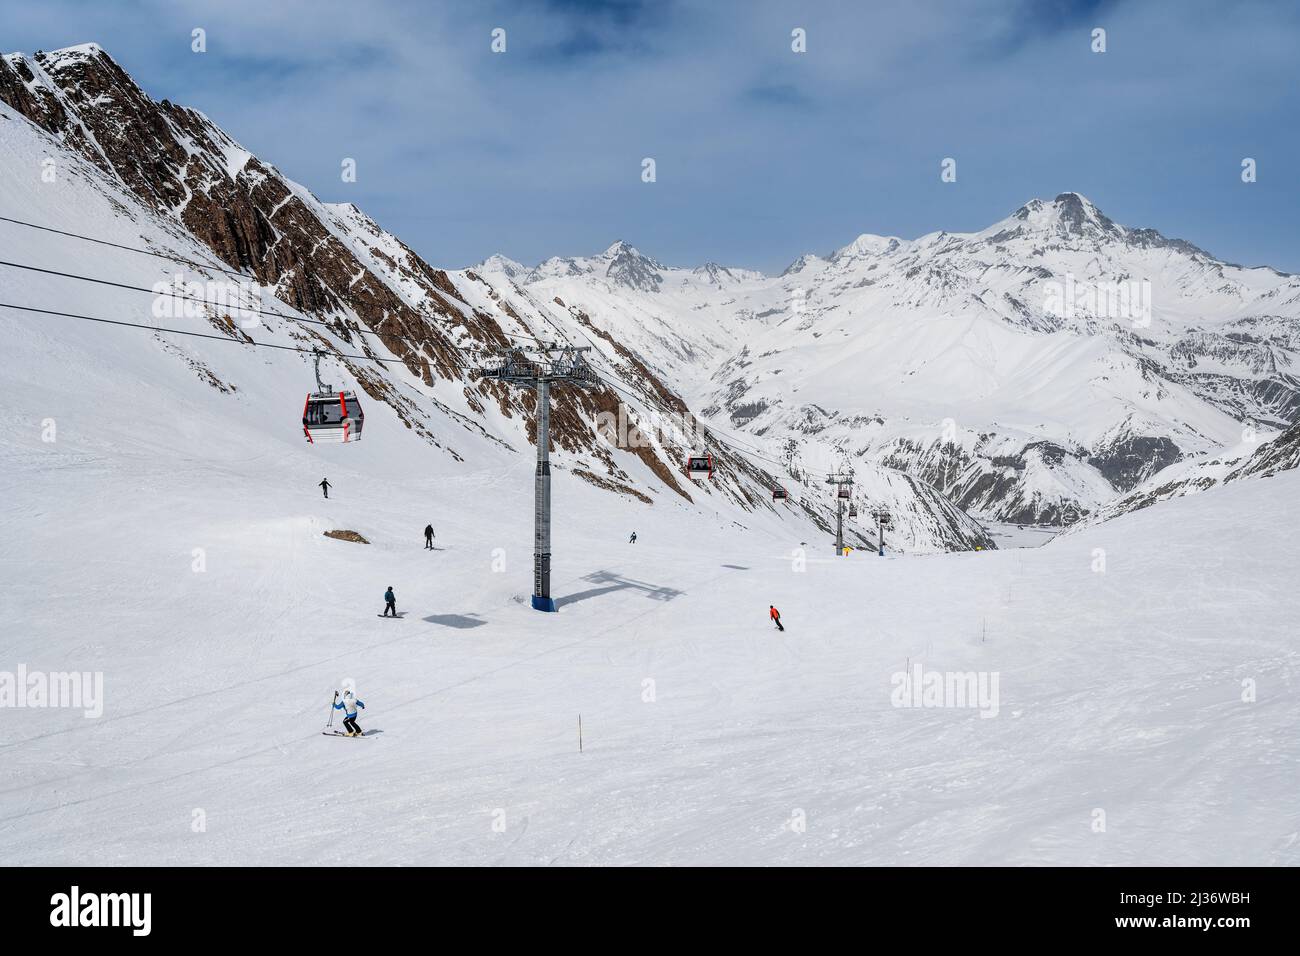 Snowy slopes in ski resort Gudauri, Georgia. Caucasus Mountains Stock Photo